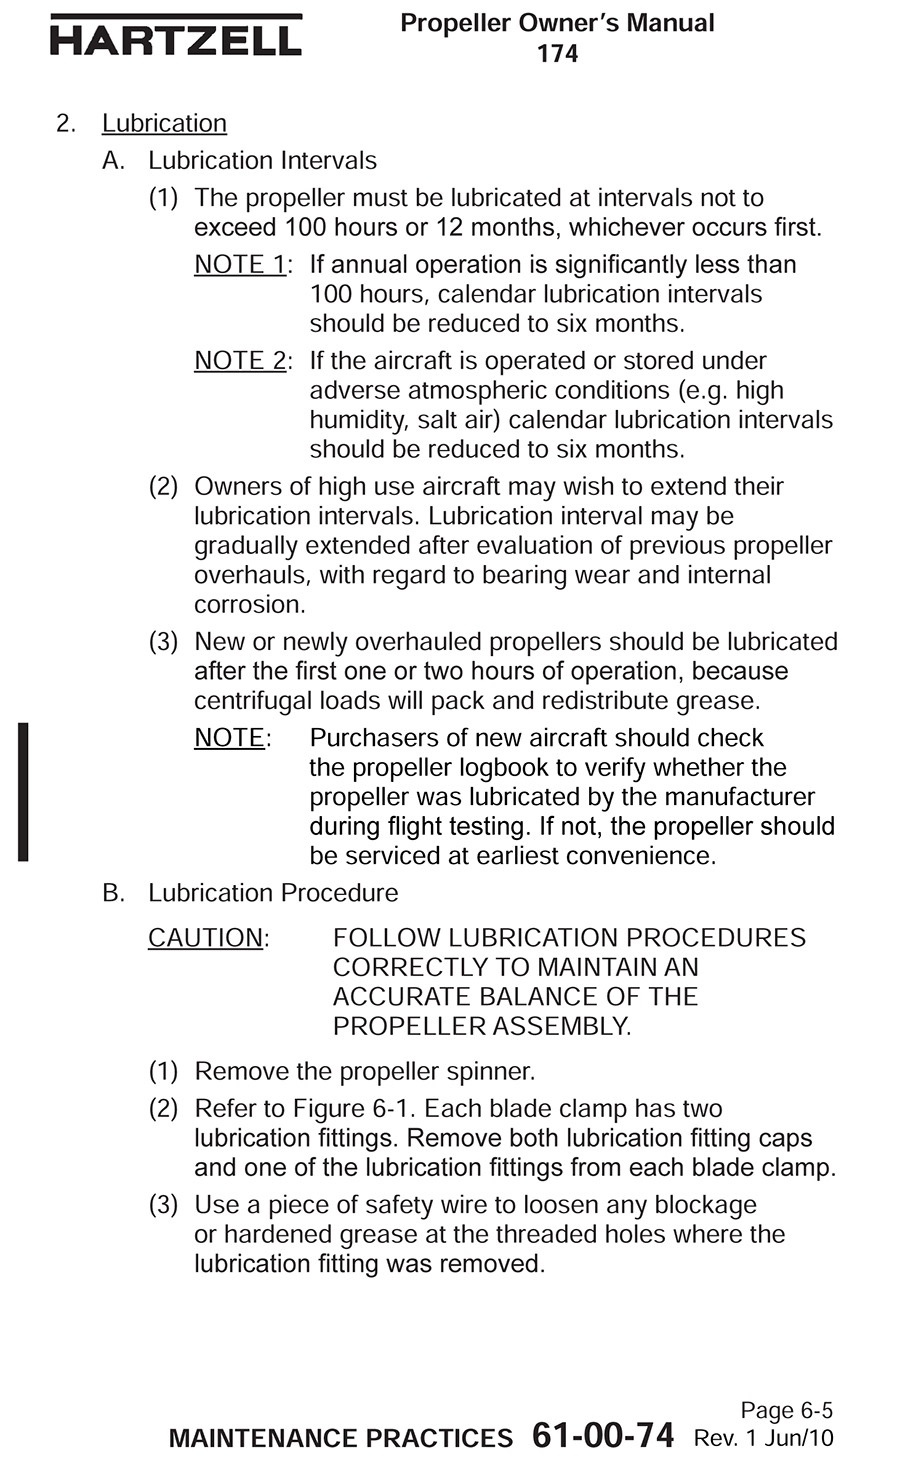 Hartzell Prop Manual 2010 page129